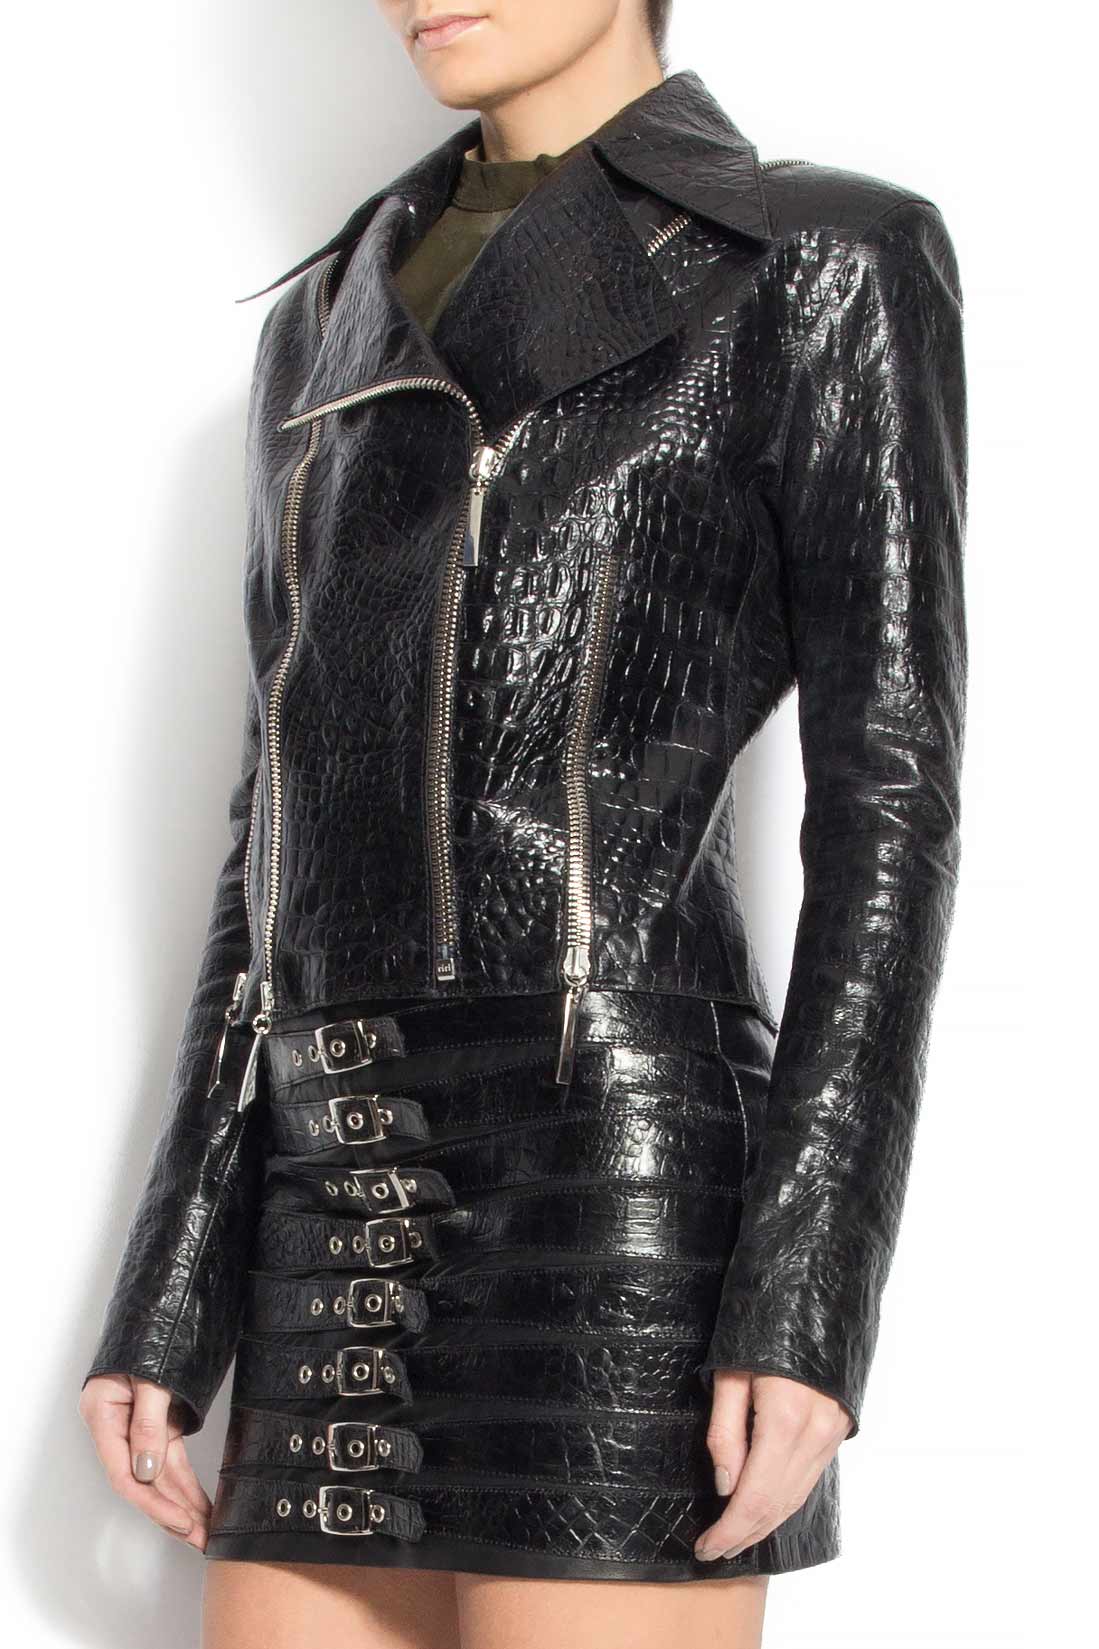 Croc-effect leather biker jacket Manokhi image 2